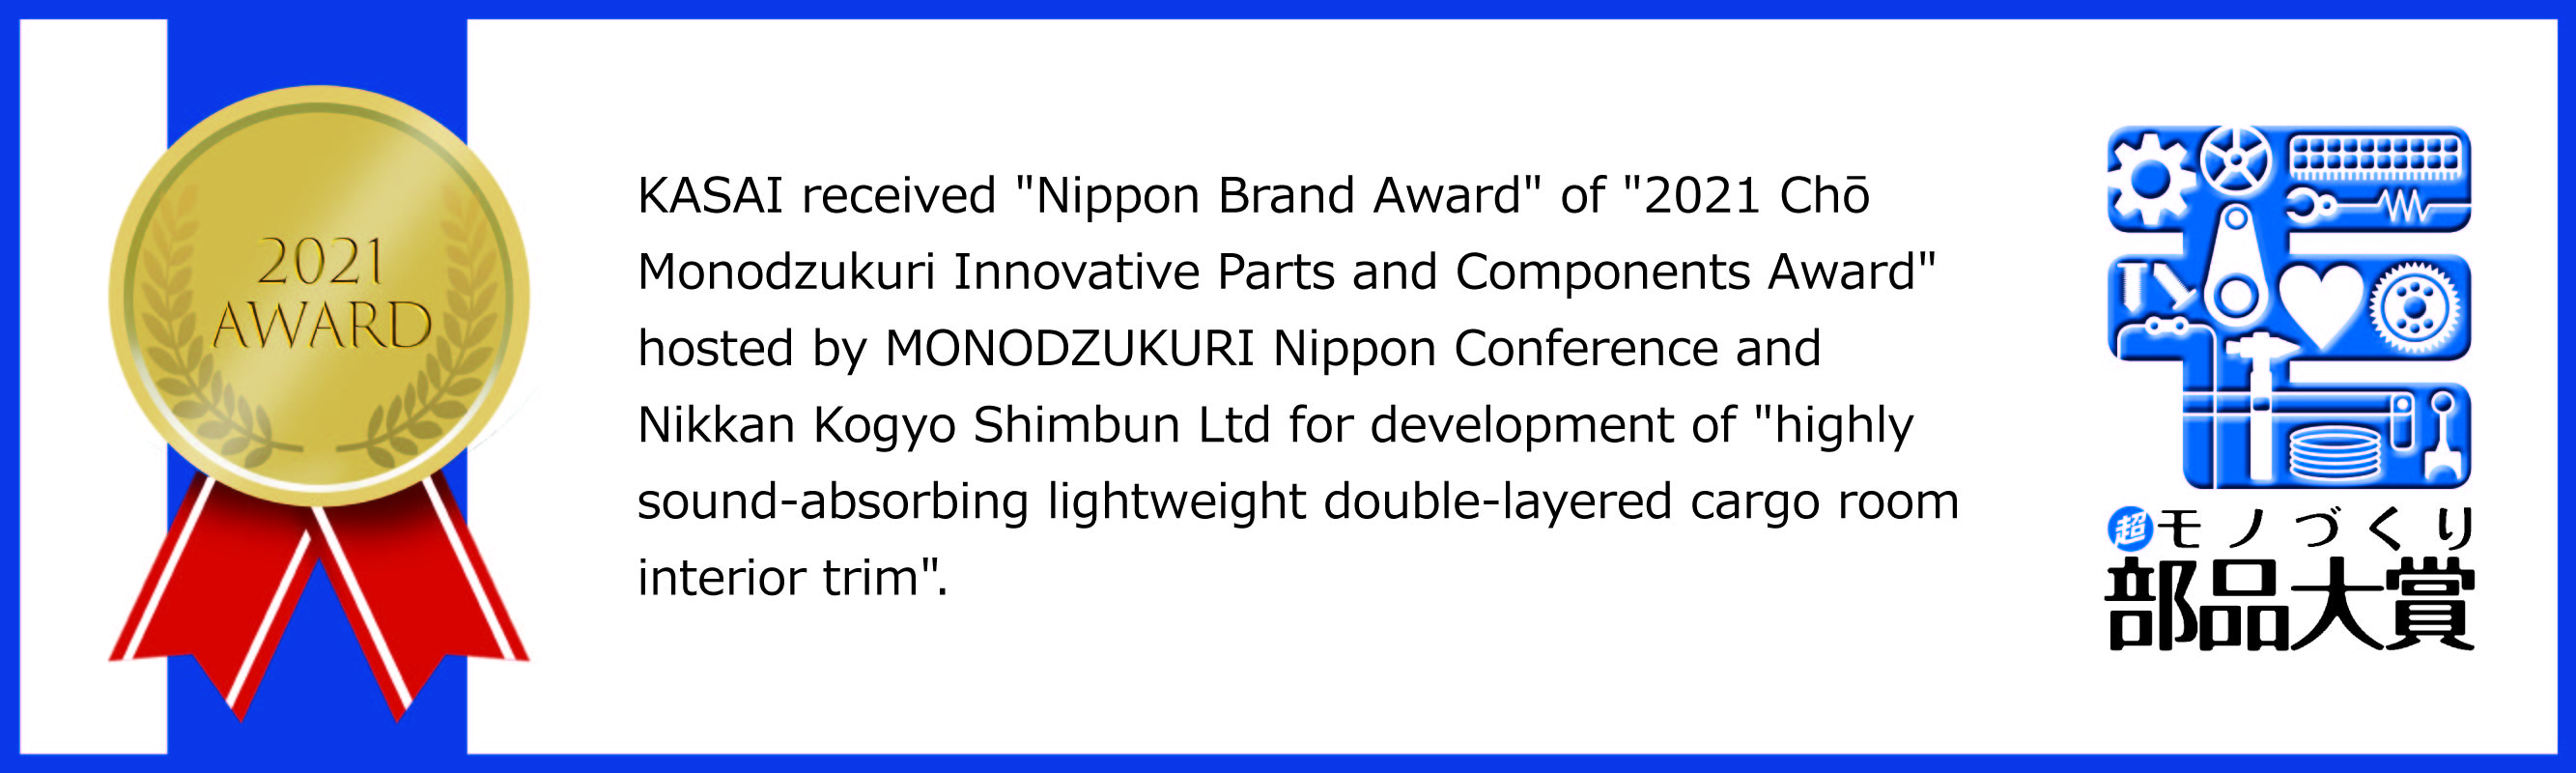 KASAI received 'Nippon brand Award' of '2021 Chō Monodzukuri Innovative parts and Components Award' hosted by MONODZUKURI Nippon Conference and Nikkan Kogyo Shimbun Ltd for development of 'highly sound-absorbing lightweight double-layerd cargo room interior trim.